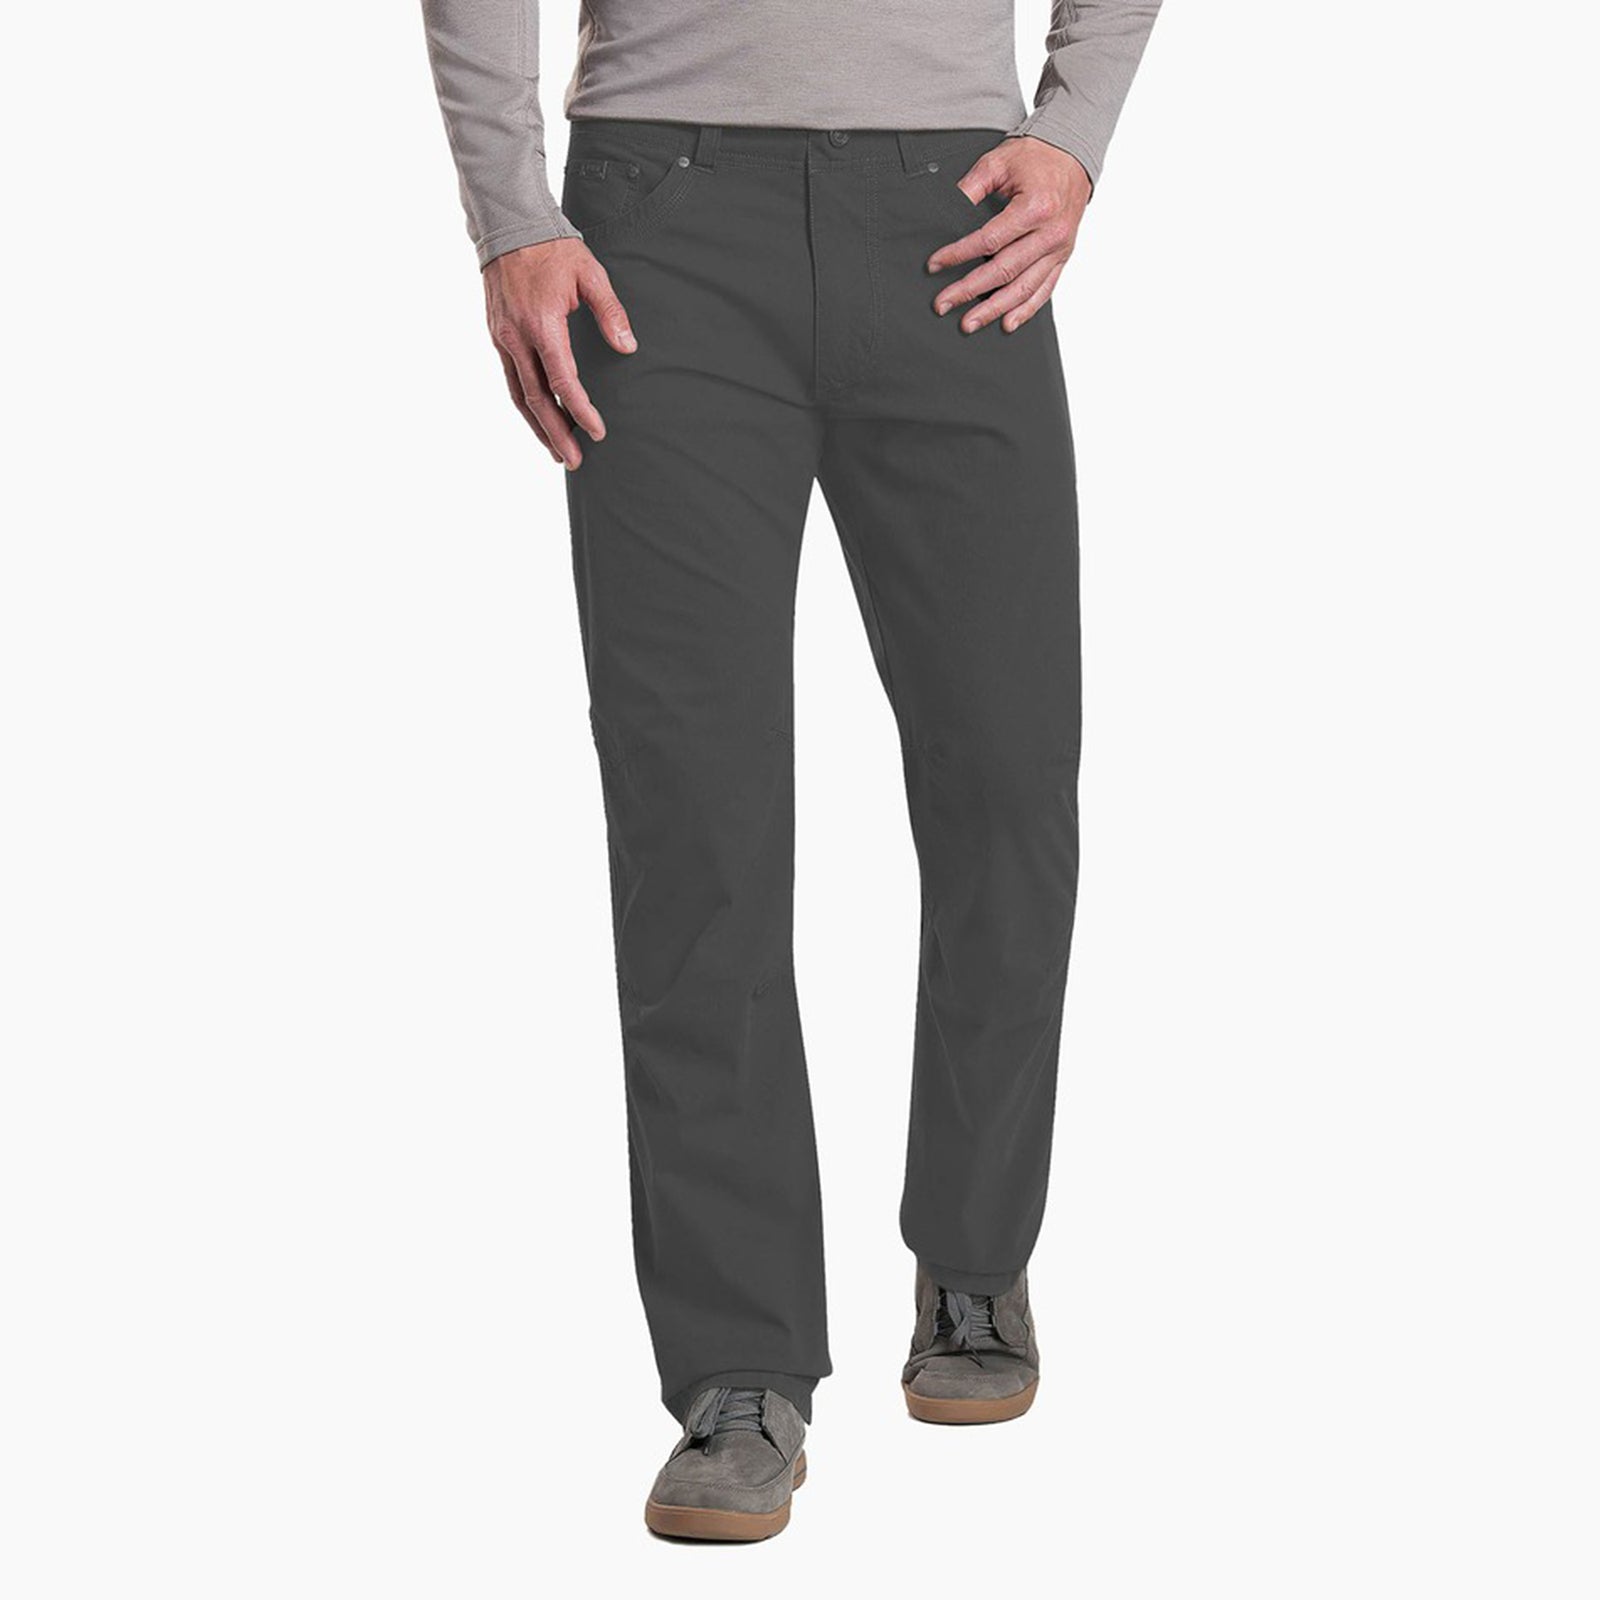 kuhl revolvr pants mens on model front view in color dark grey